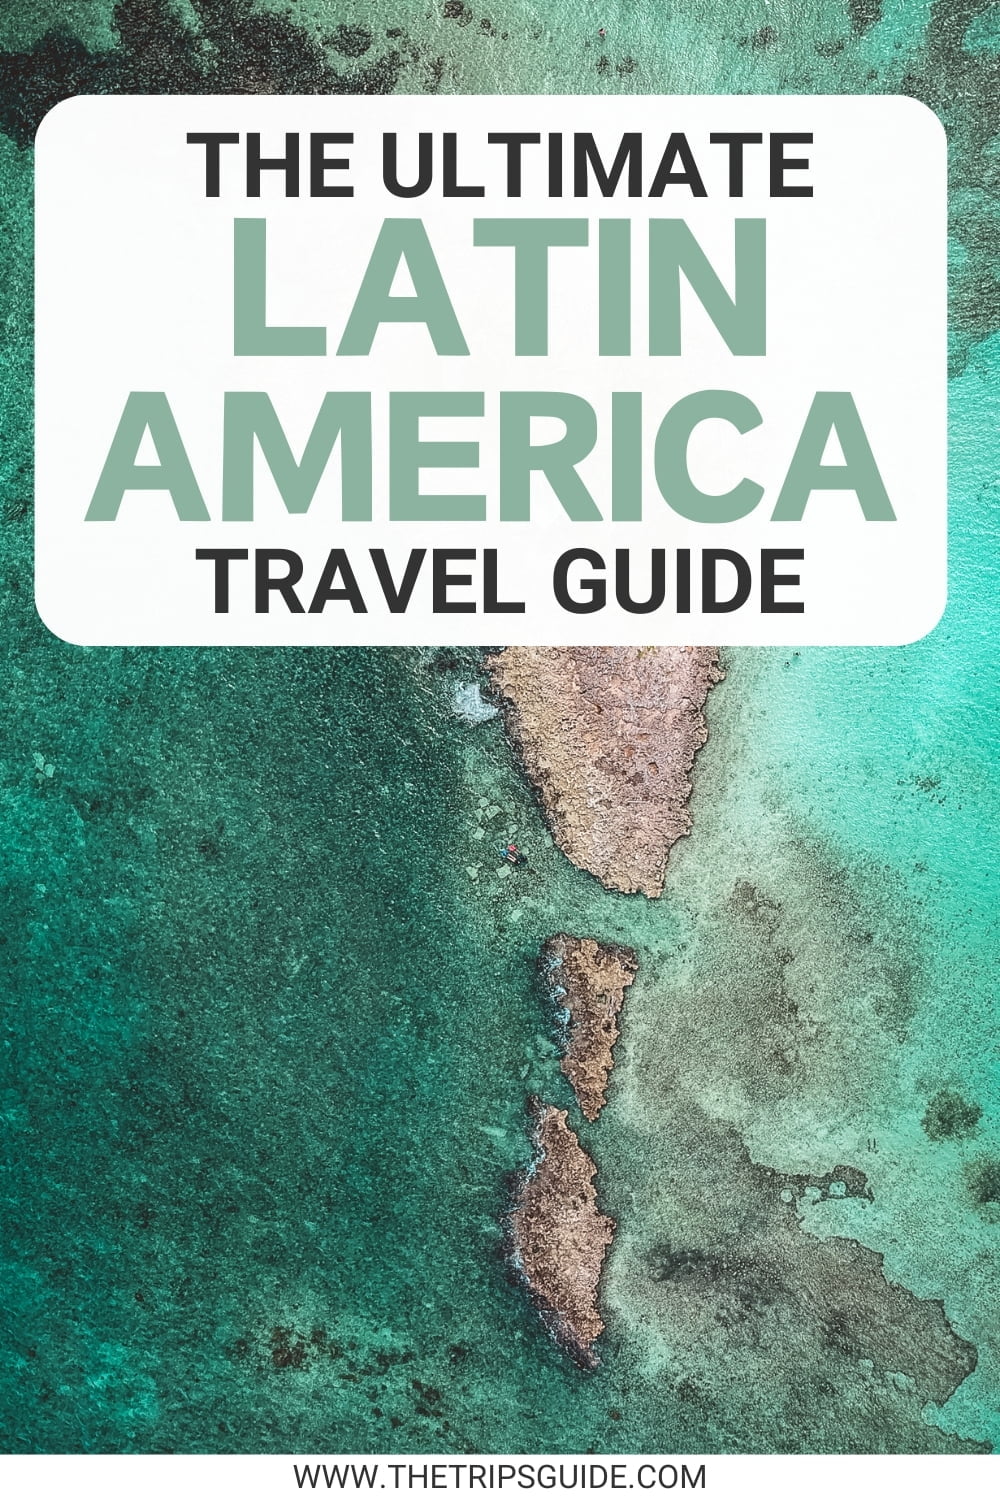 Latin America travel guide